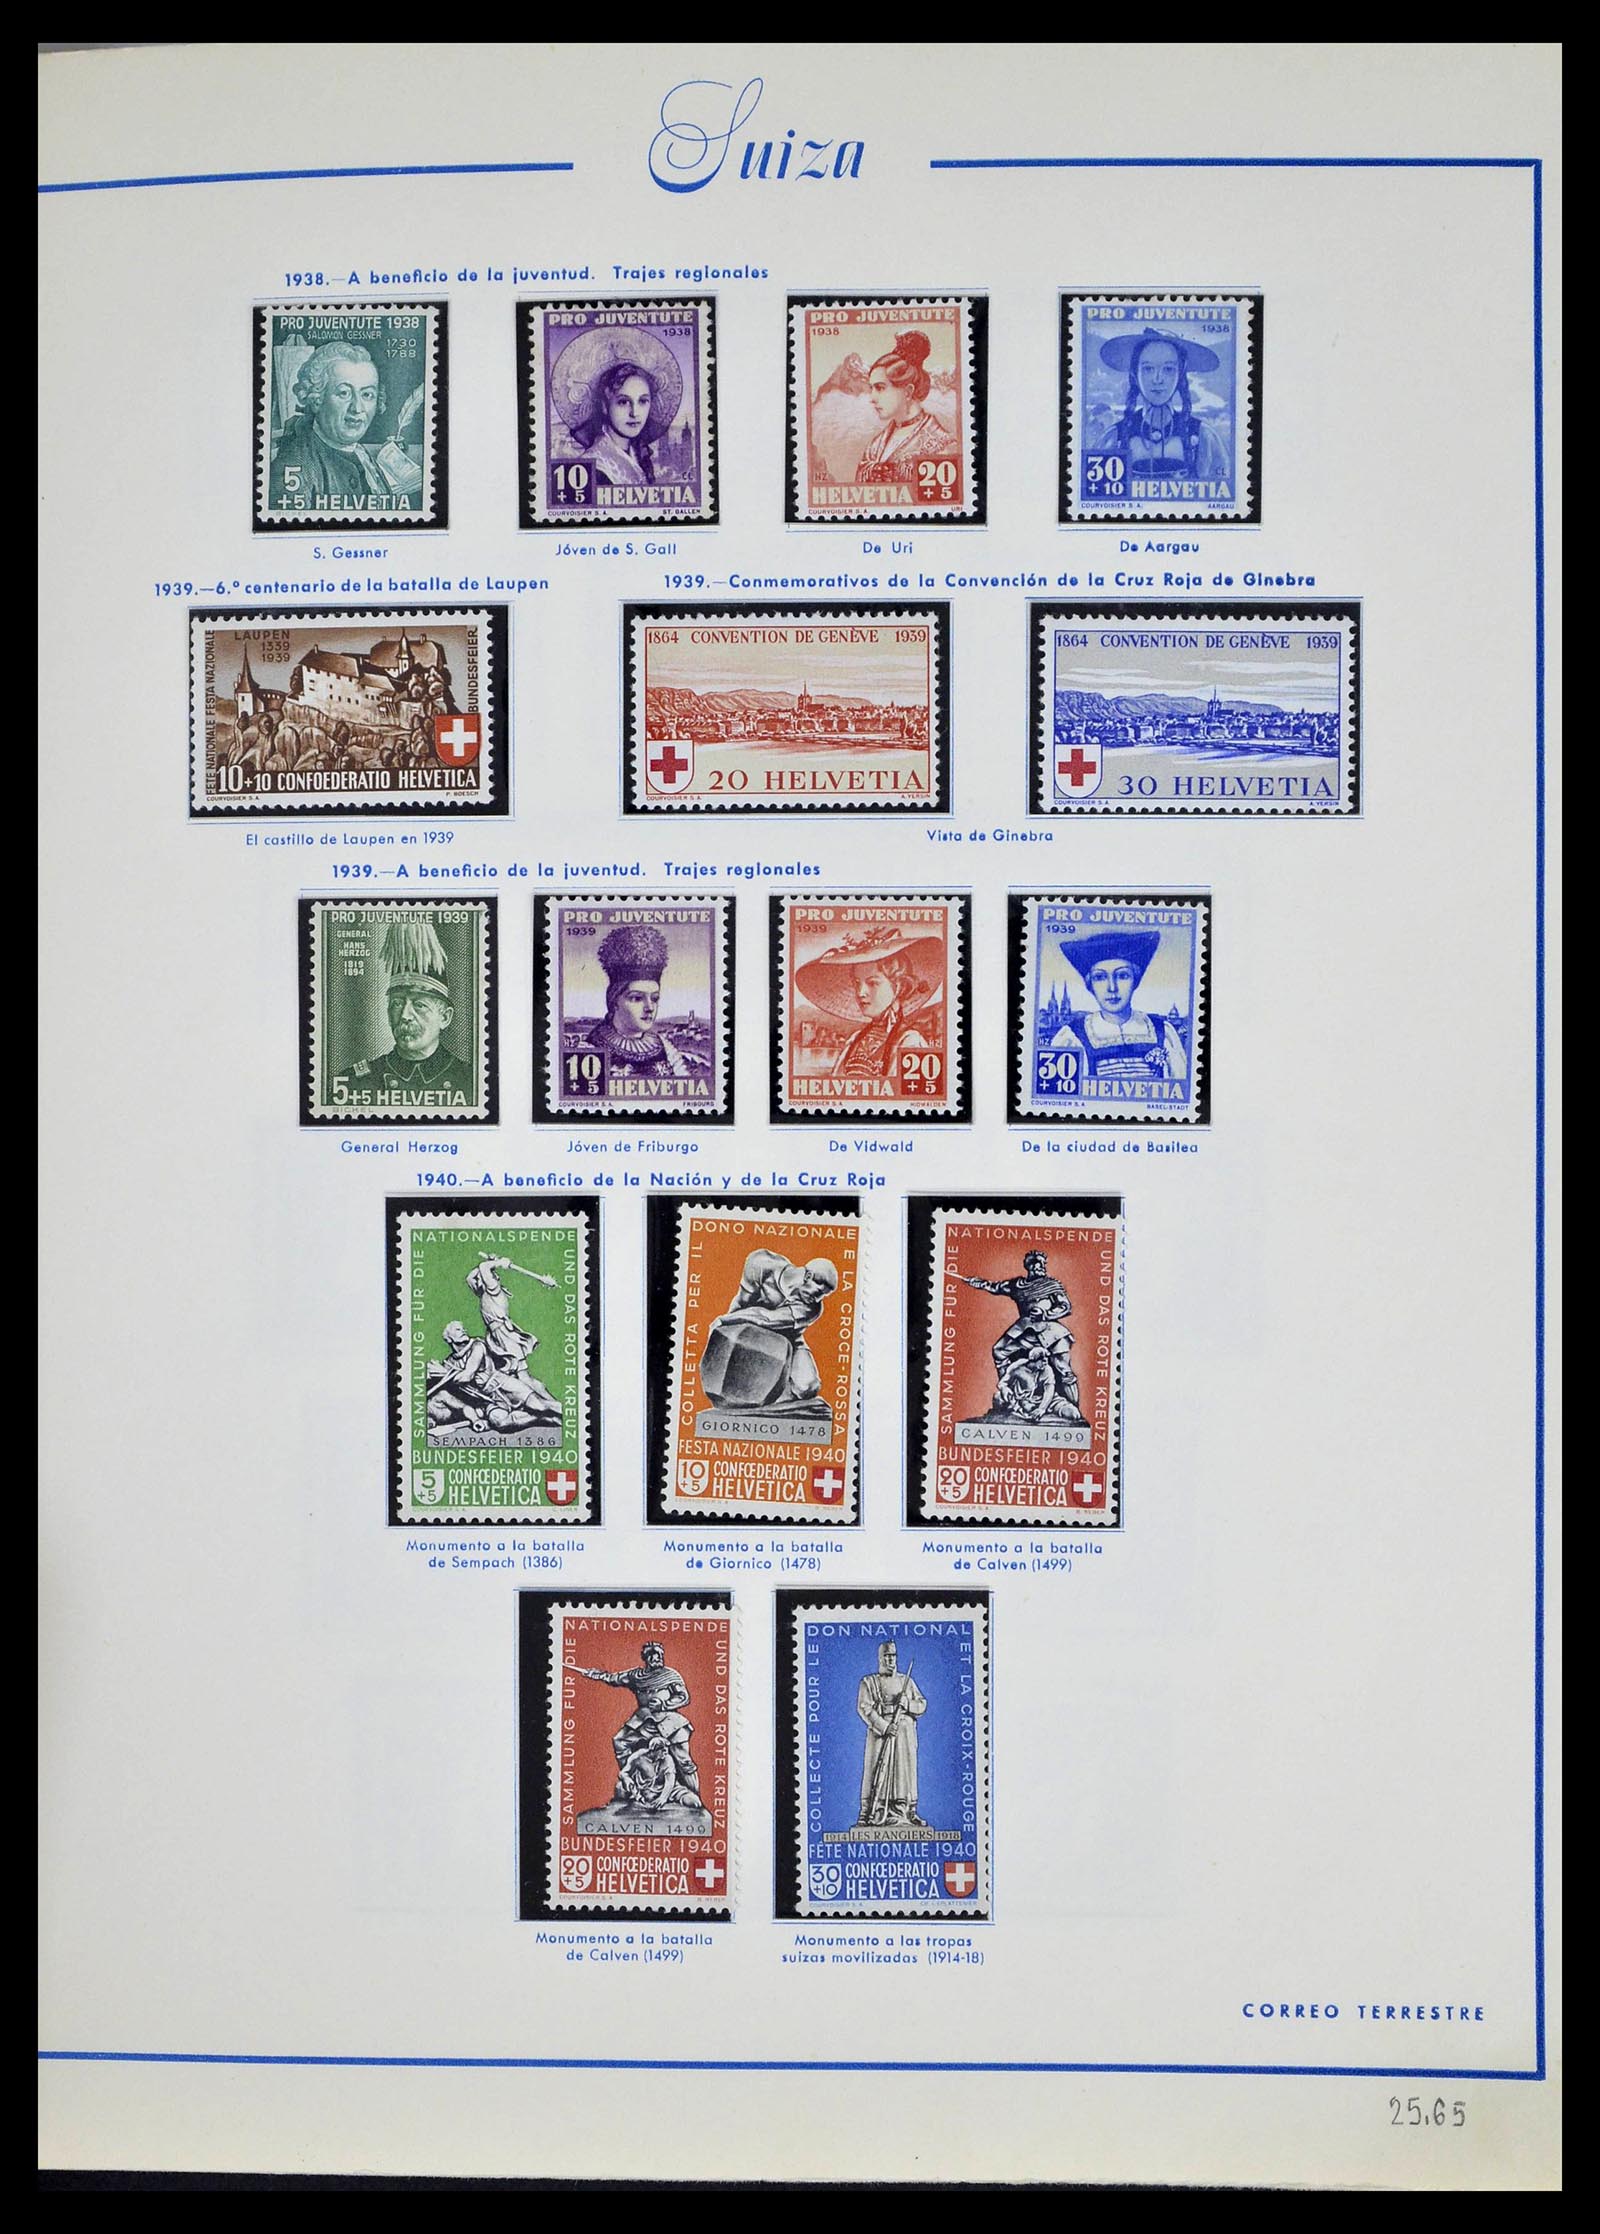 39217 0020 - Stamp collection 39217 Switzerland 1850-1986.